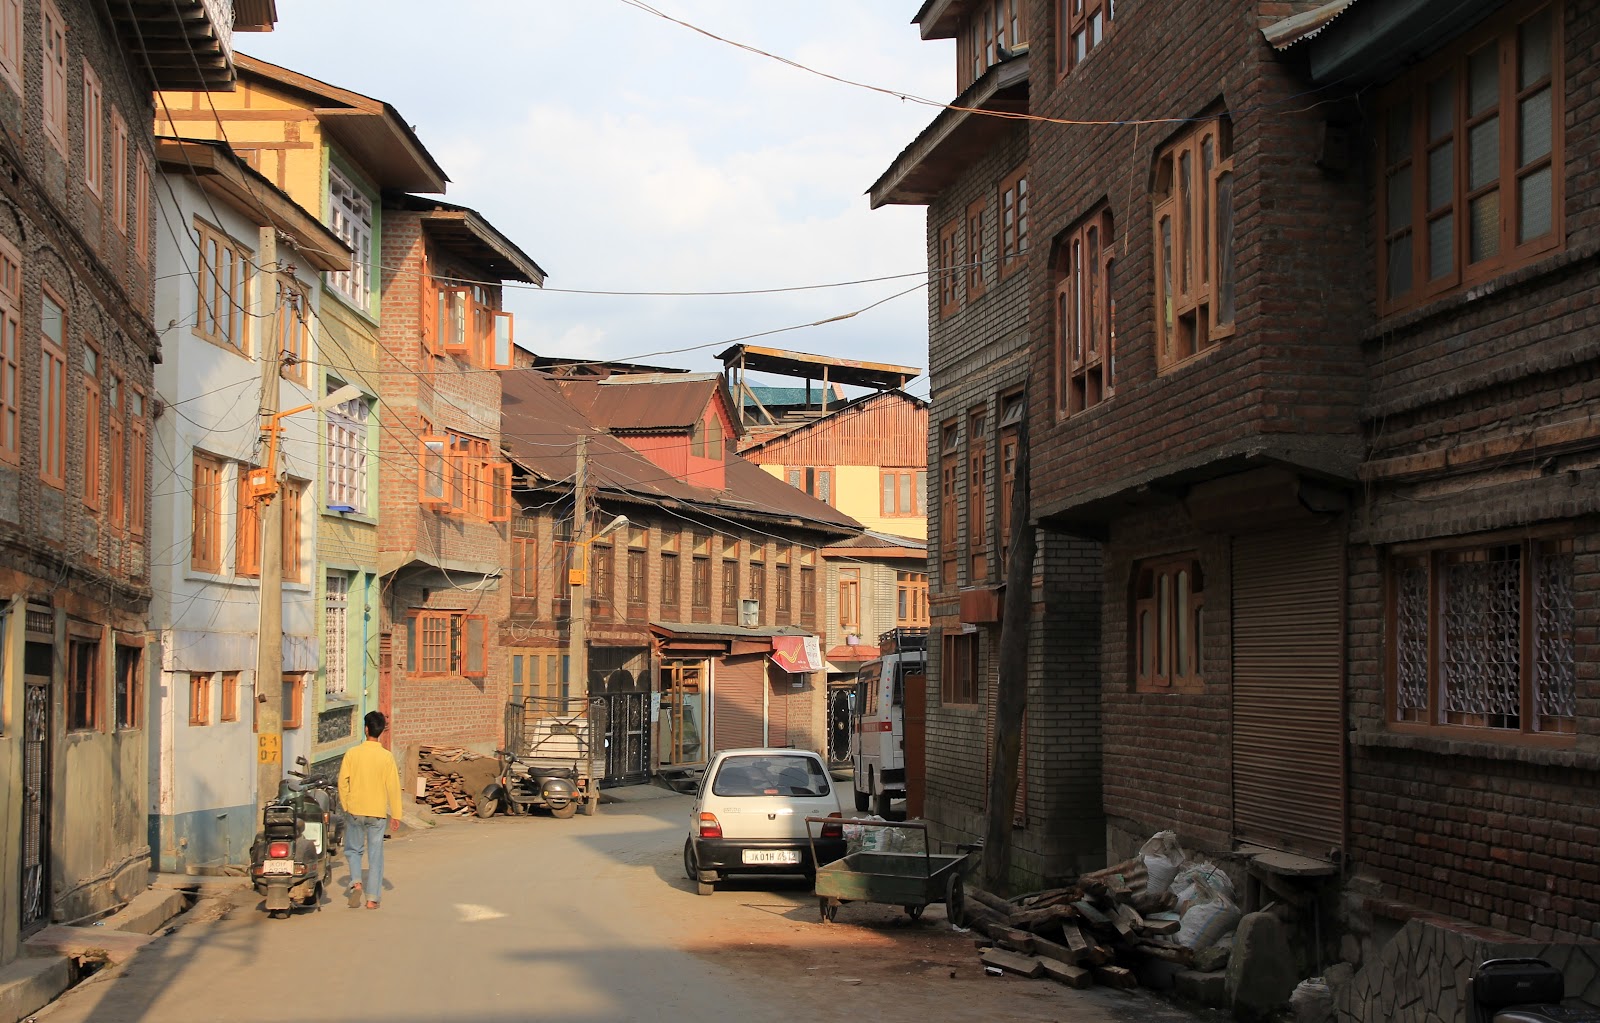 Kashmir Houses Pictu pic